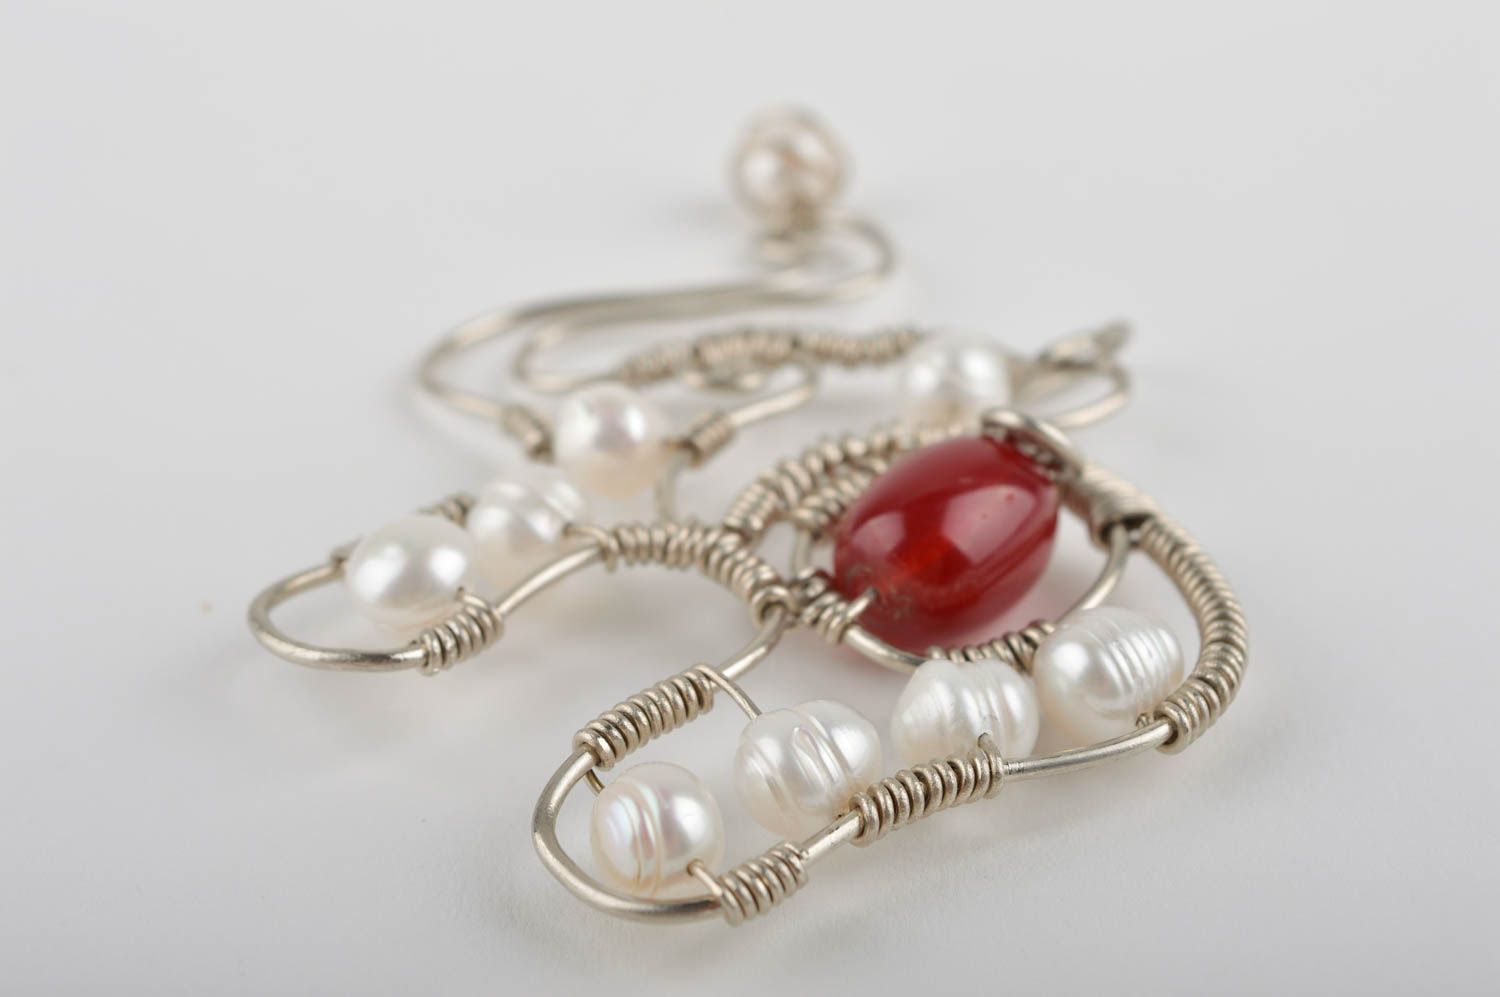 Handmade metal jewelry pendant necklace charm necklace designer accessories photo 4